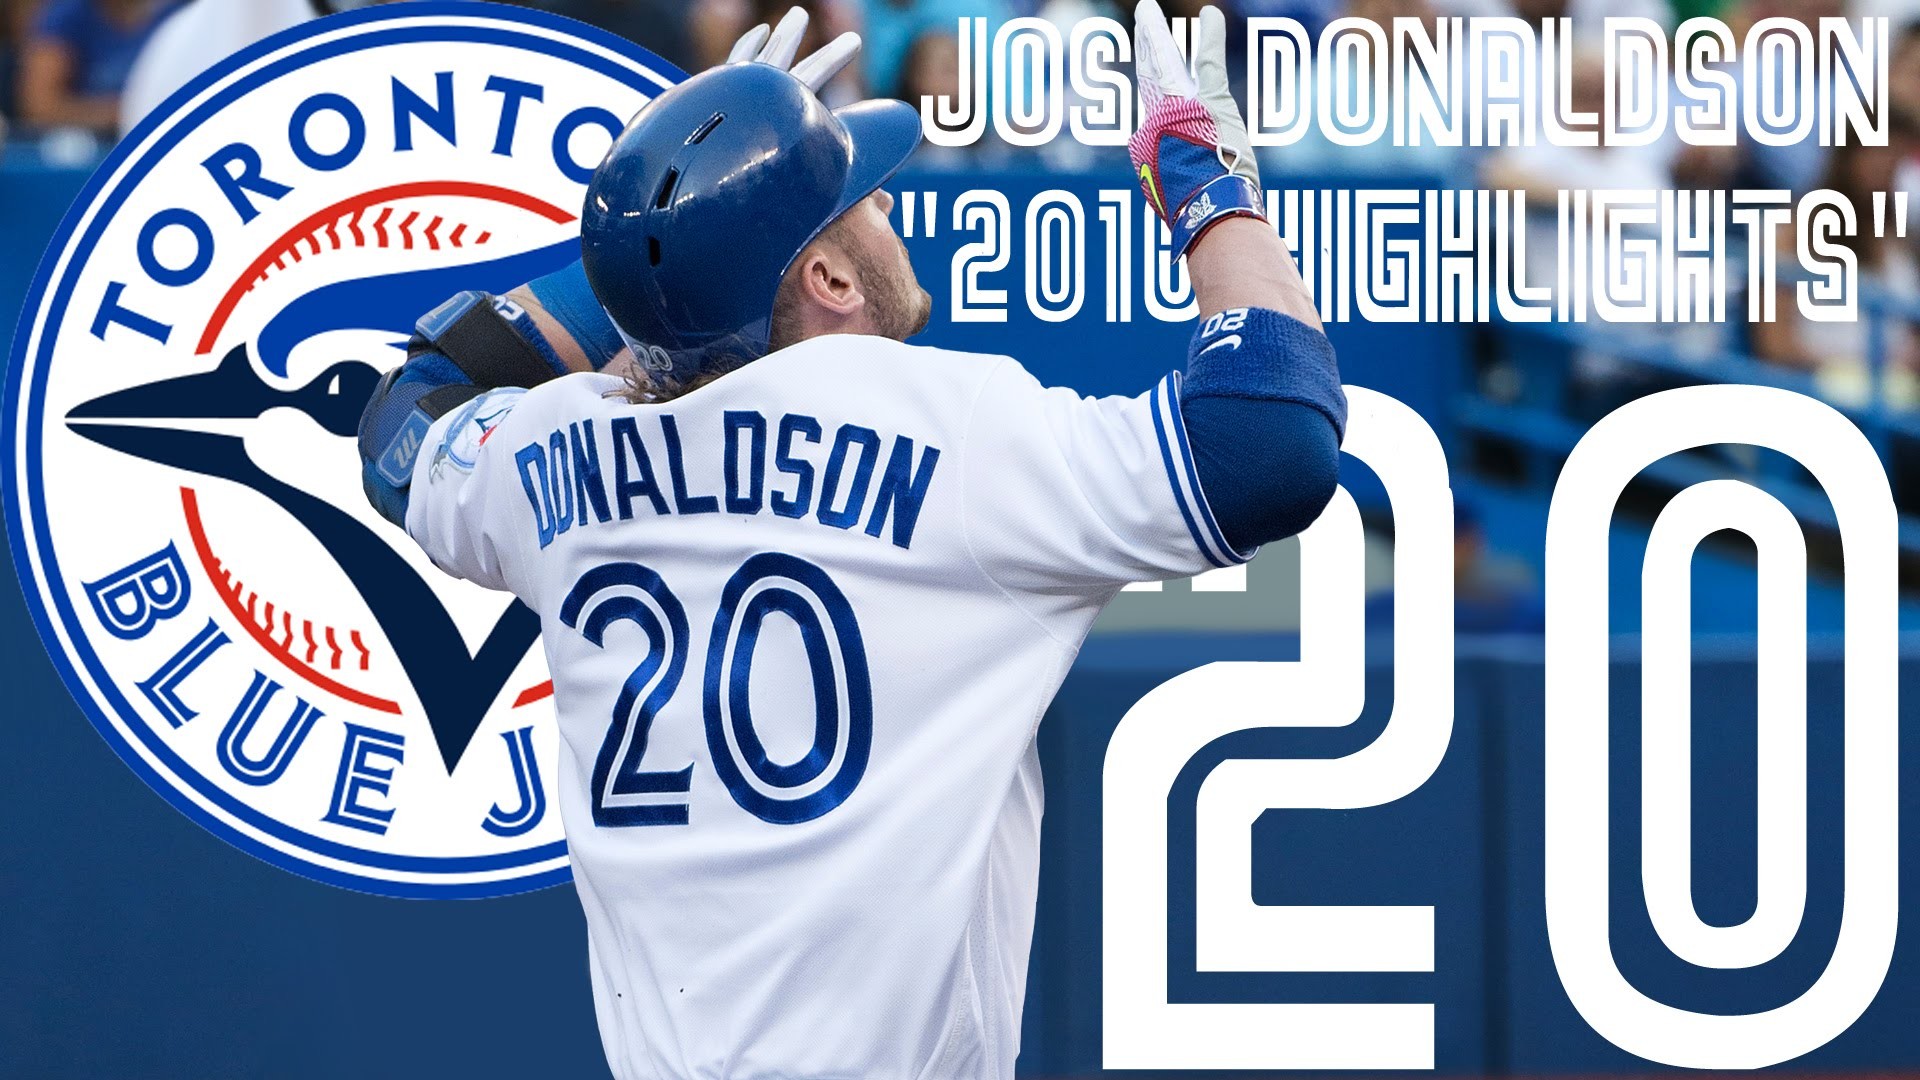 1920x1080 Josh Donaldson | Toronto Blue Jays | 2016 Highlights Mix á´´á´°